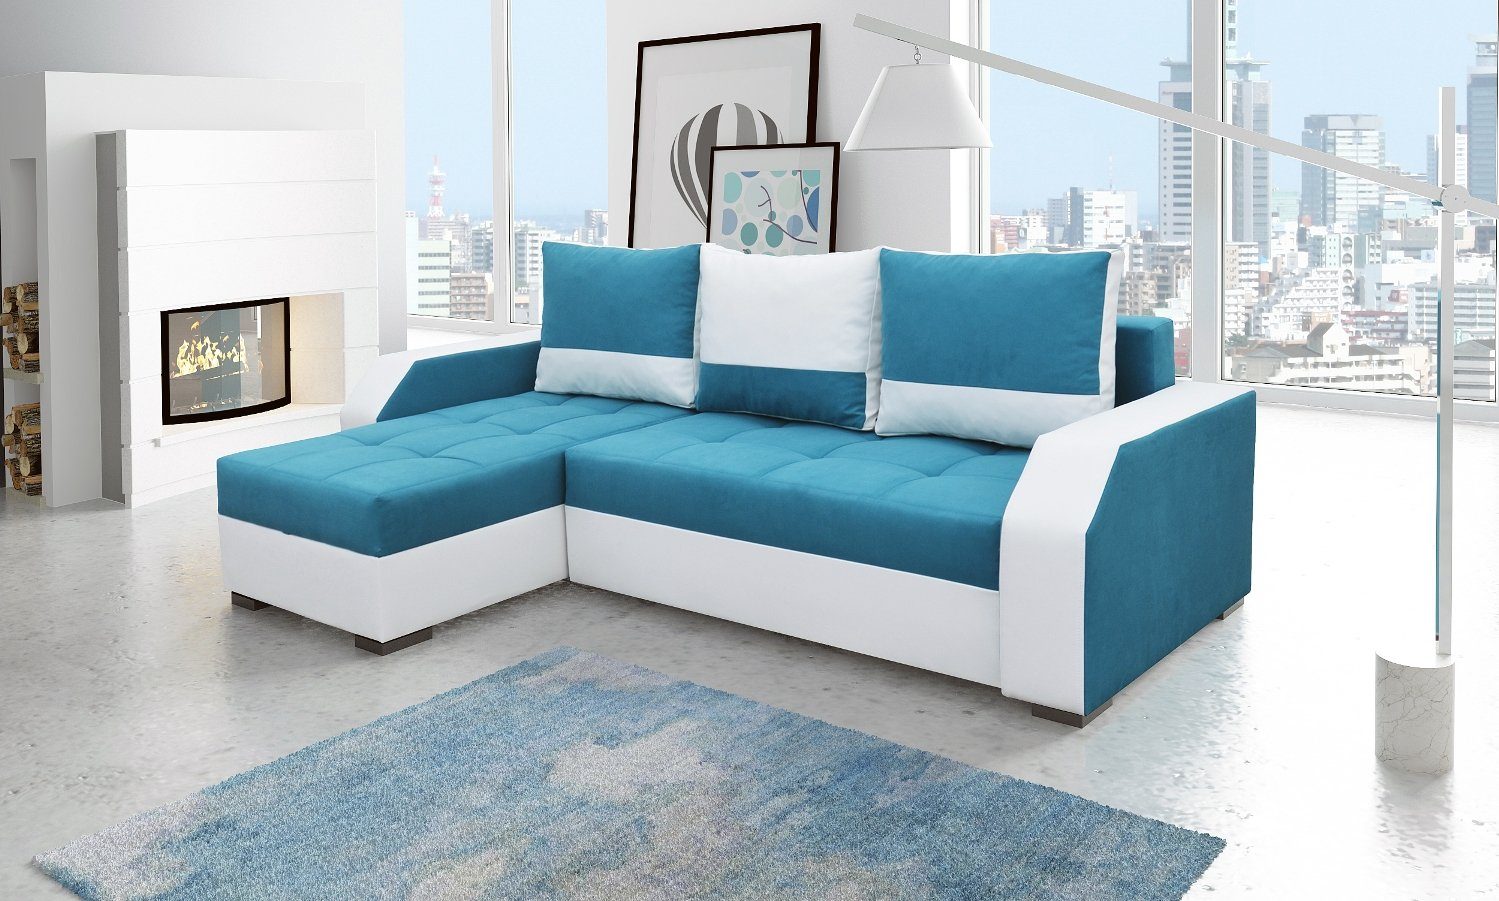 JVmoebel Ecksofa, Design Ecksofa Bettfunktion Couch Leder Textil Polster Sofas Couchen Blau / Weiß